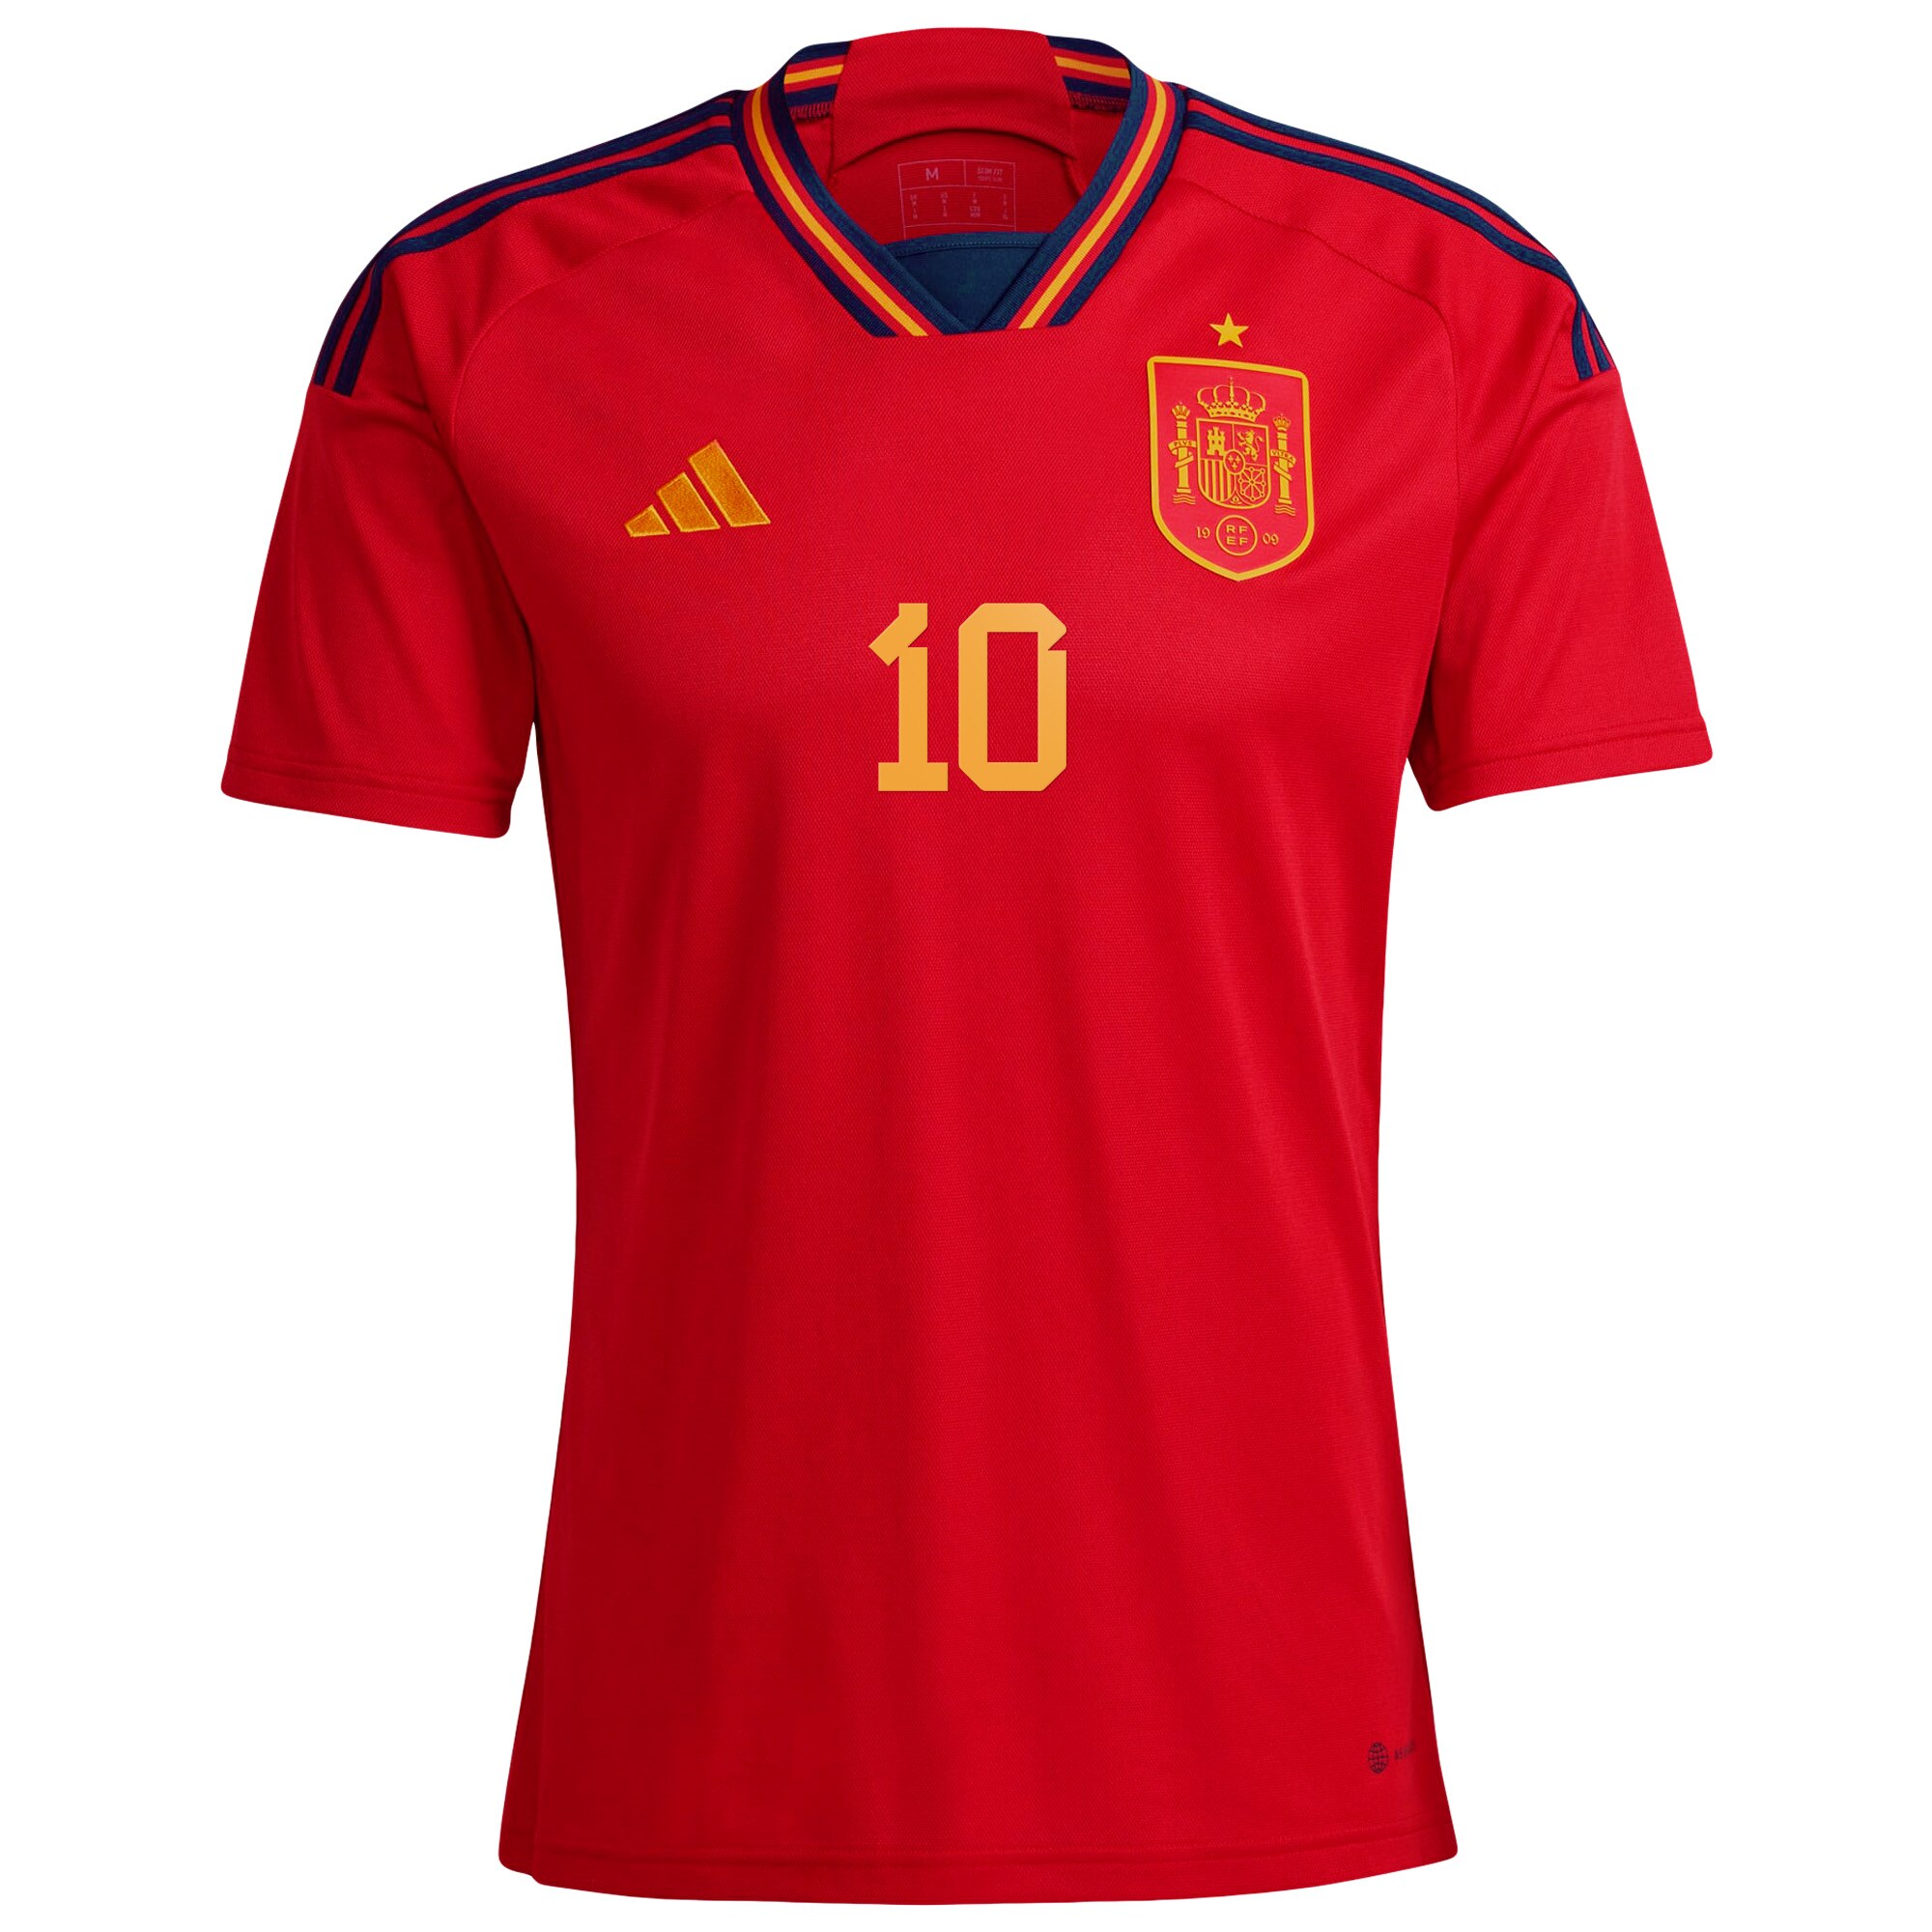 Pedri Spain National Team 2022/23 Home Player Jersey